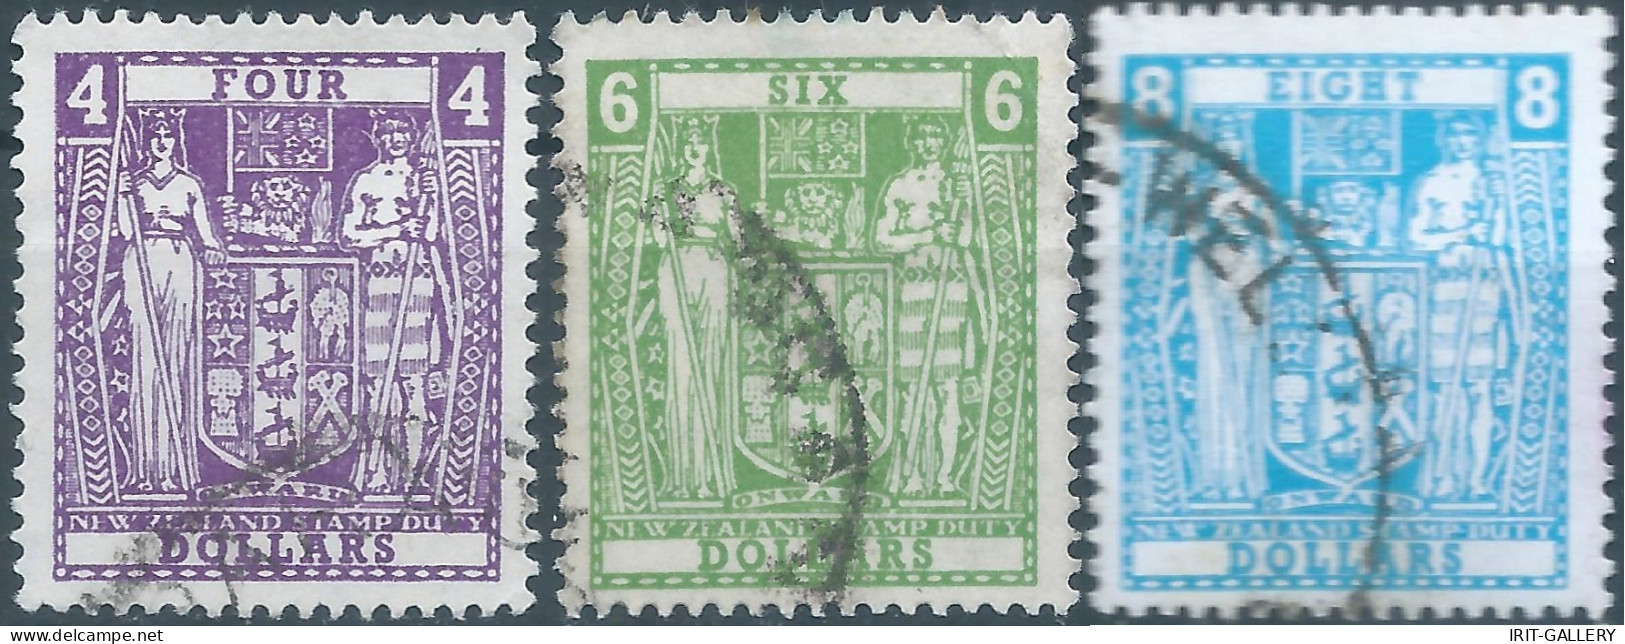 Nuova Zelanda,Nouvelle-Zélande- NEW ZELAND 1967 REVENUE STAMP DUTY-Tax Fiscal,4 - 6 - 8 Dollars,Obliterated - Fiscaux-postaux